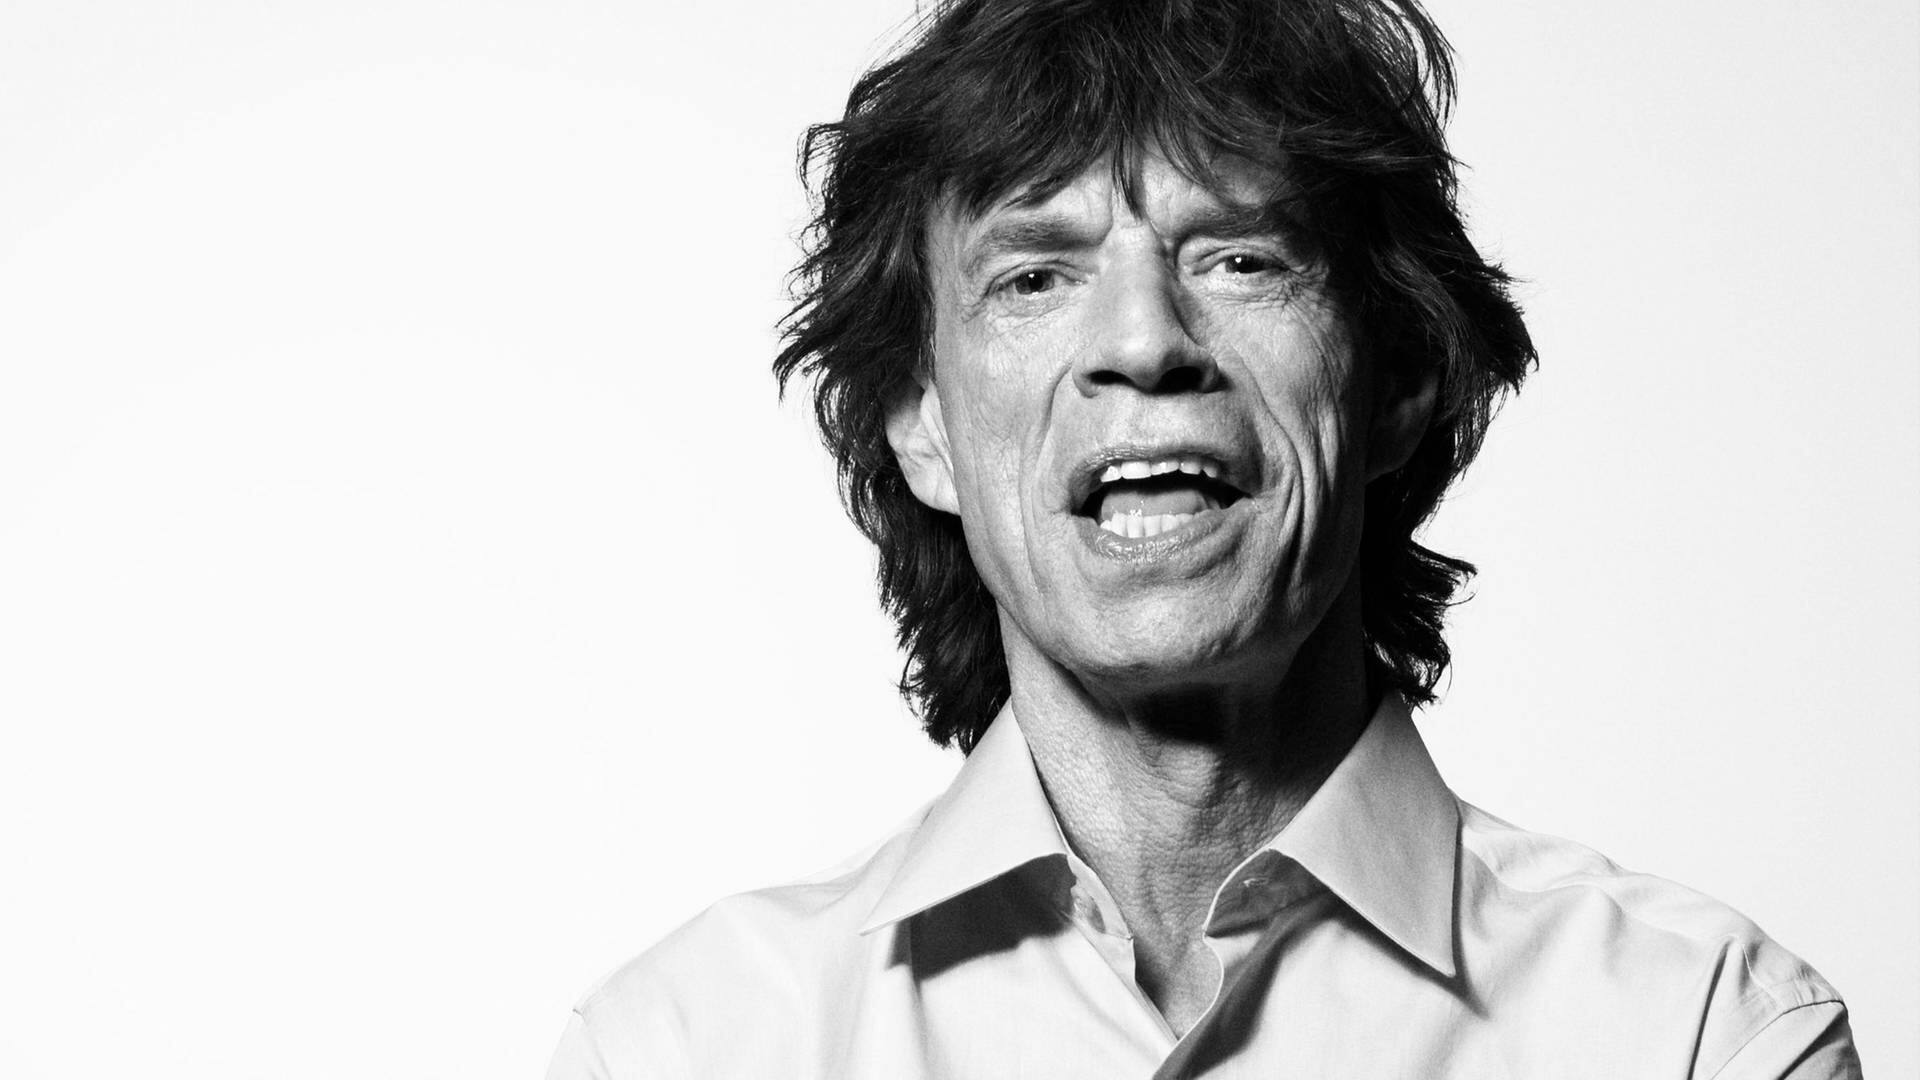 Mick Jagger (Foto: Bryan Adams (Universal))